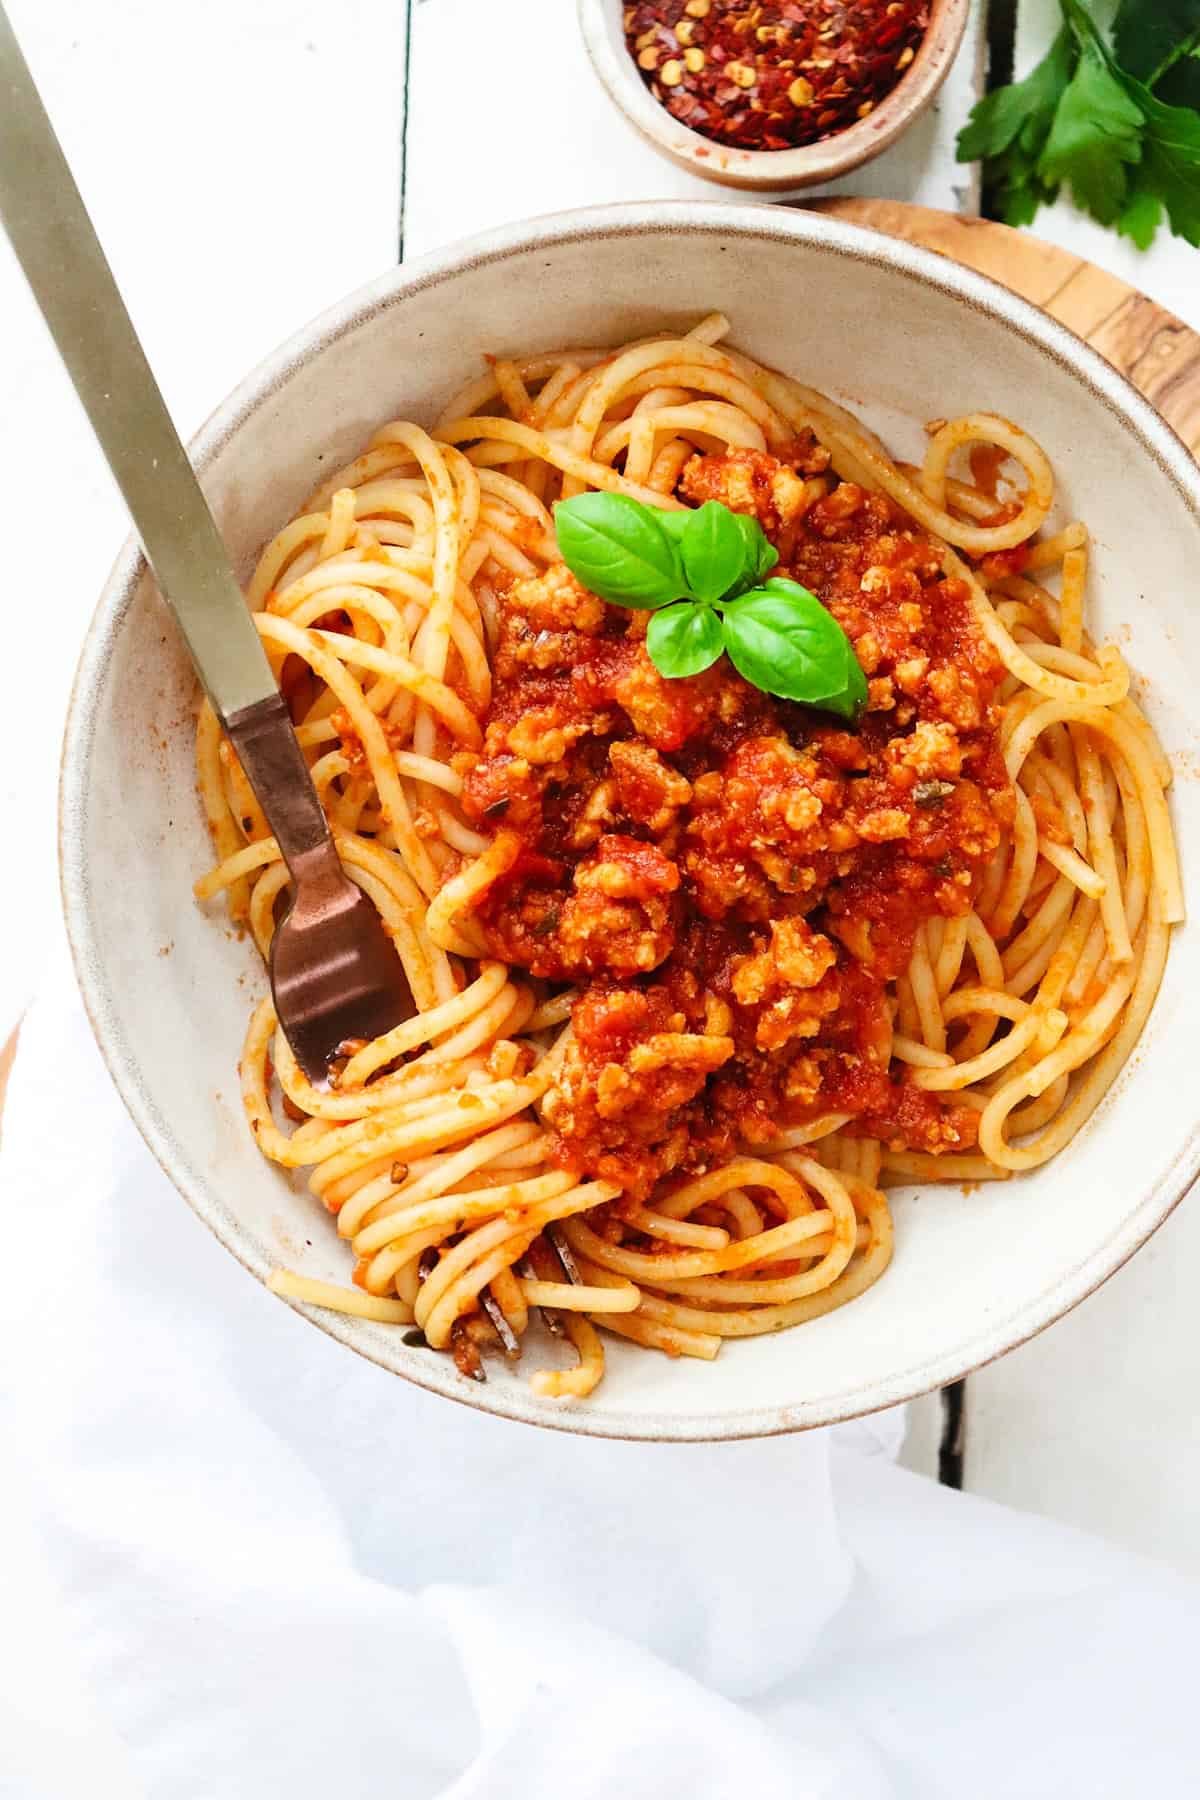 chicken spaghetti in a bowl with basil garnish.